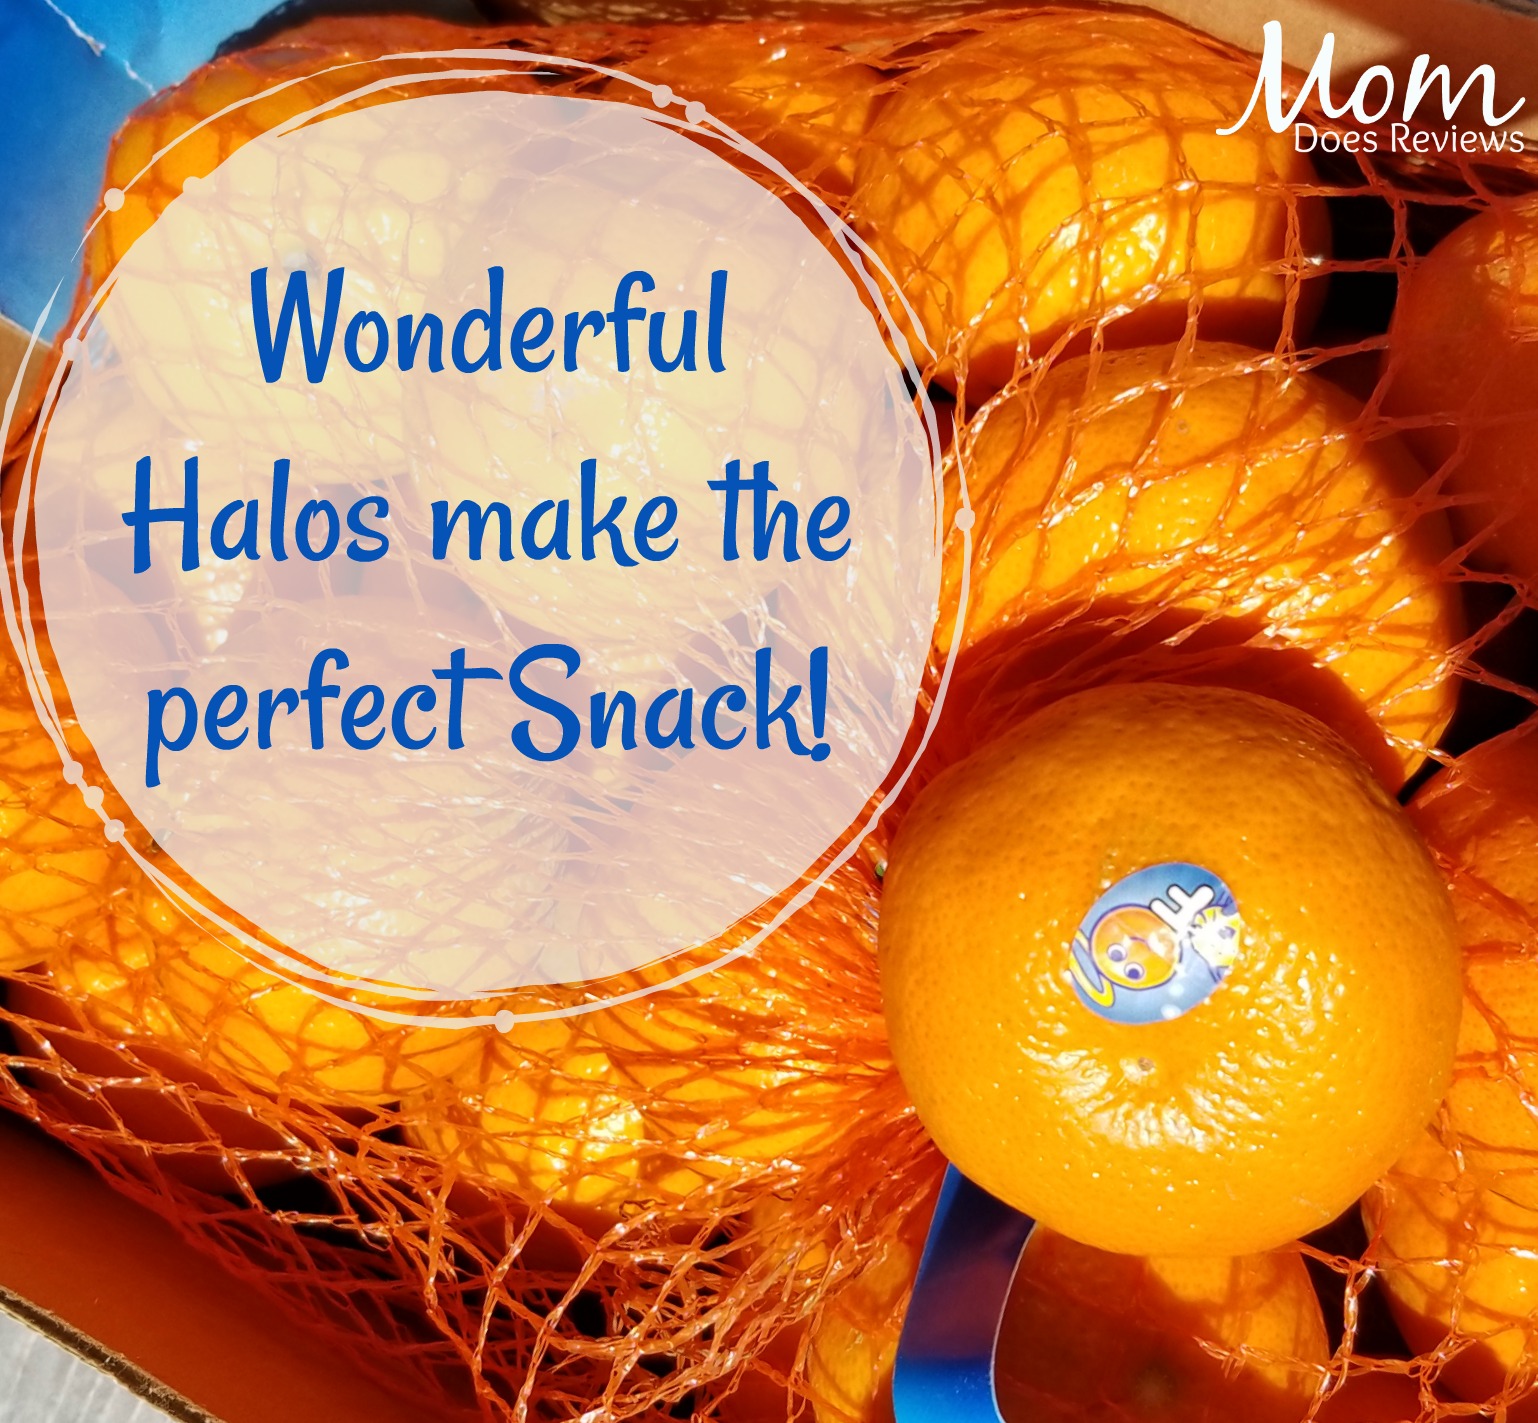 Wonderful Halos make the perfect snack